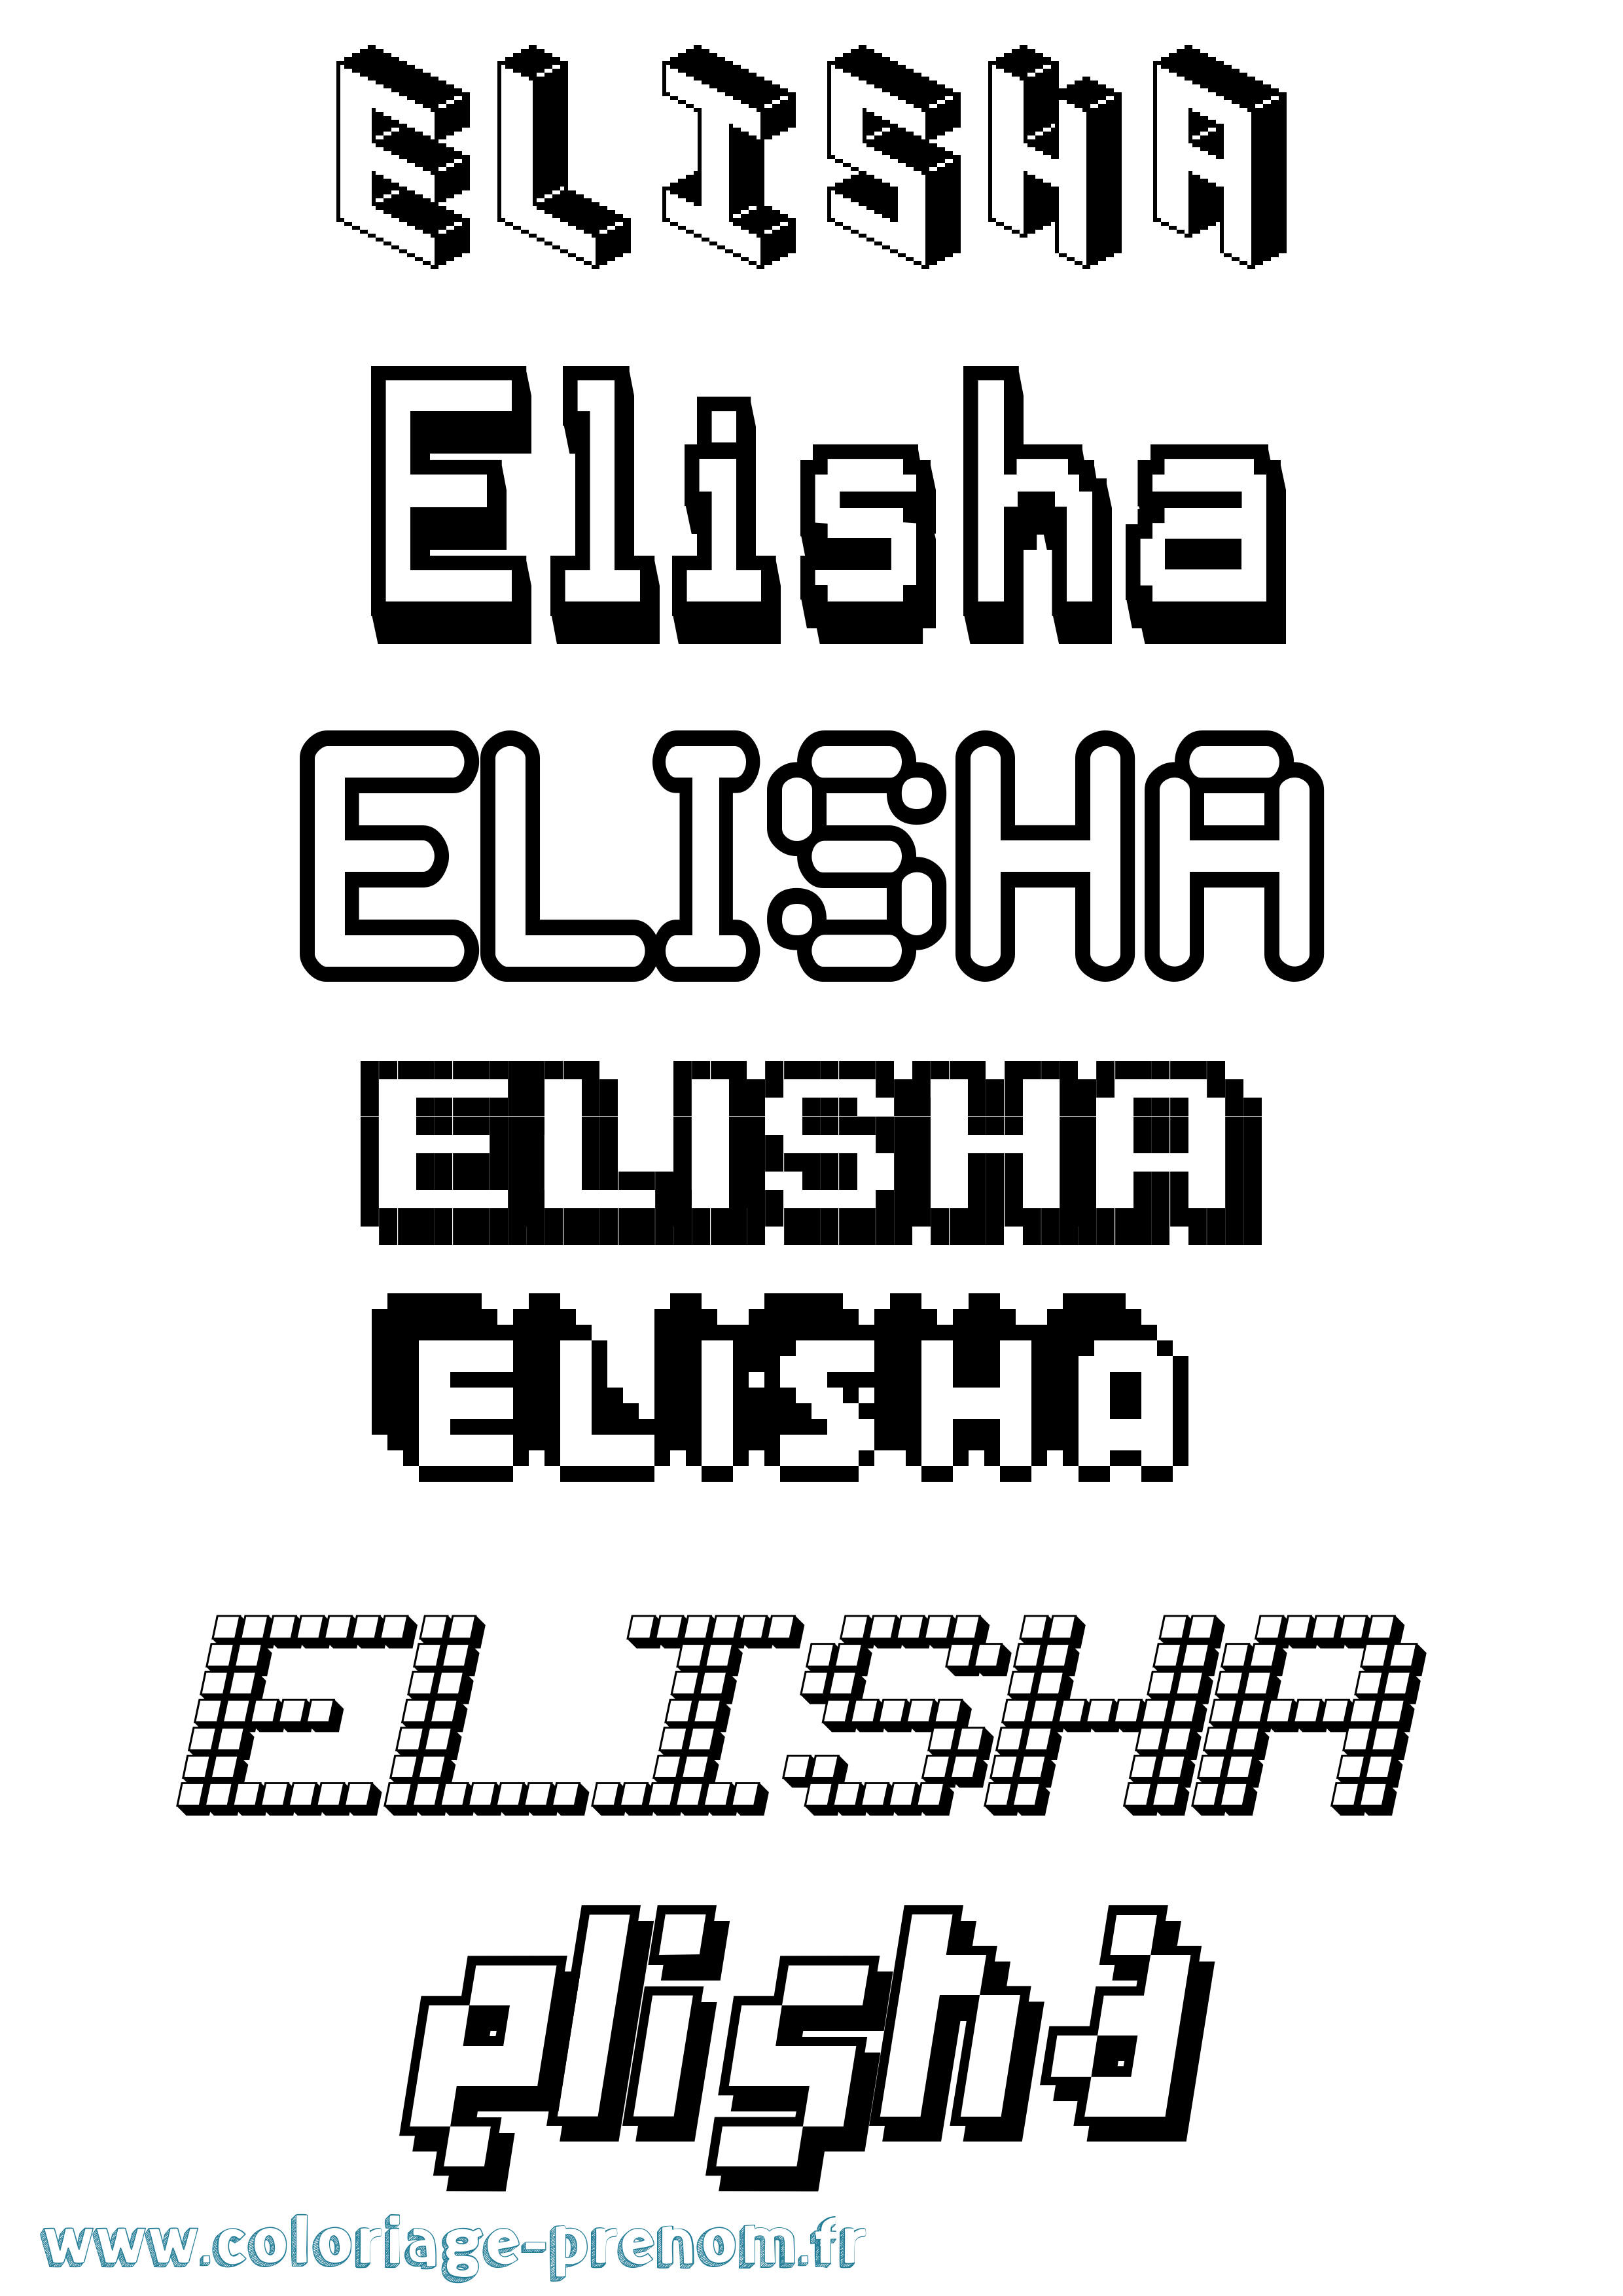 Coloriage prénom Elisha Pixel